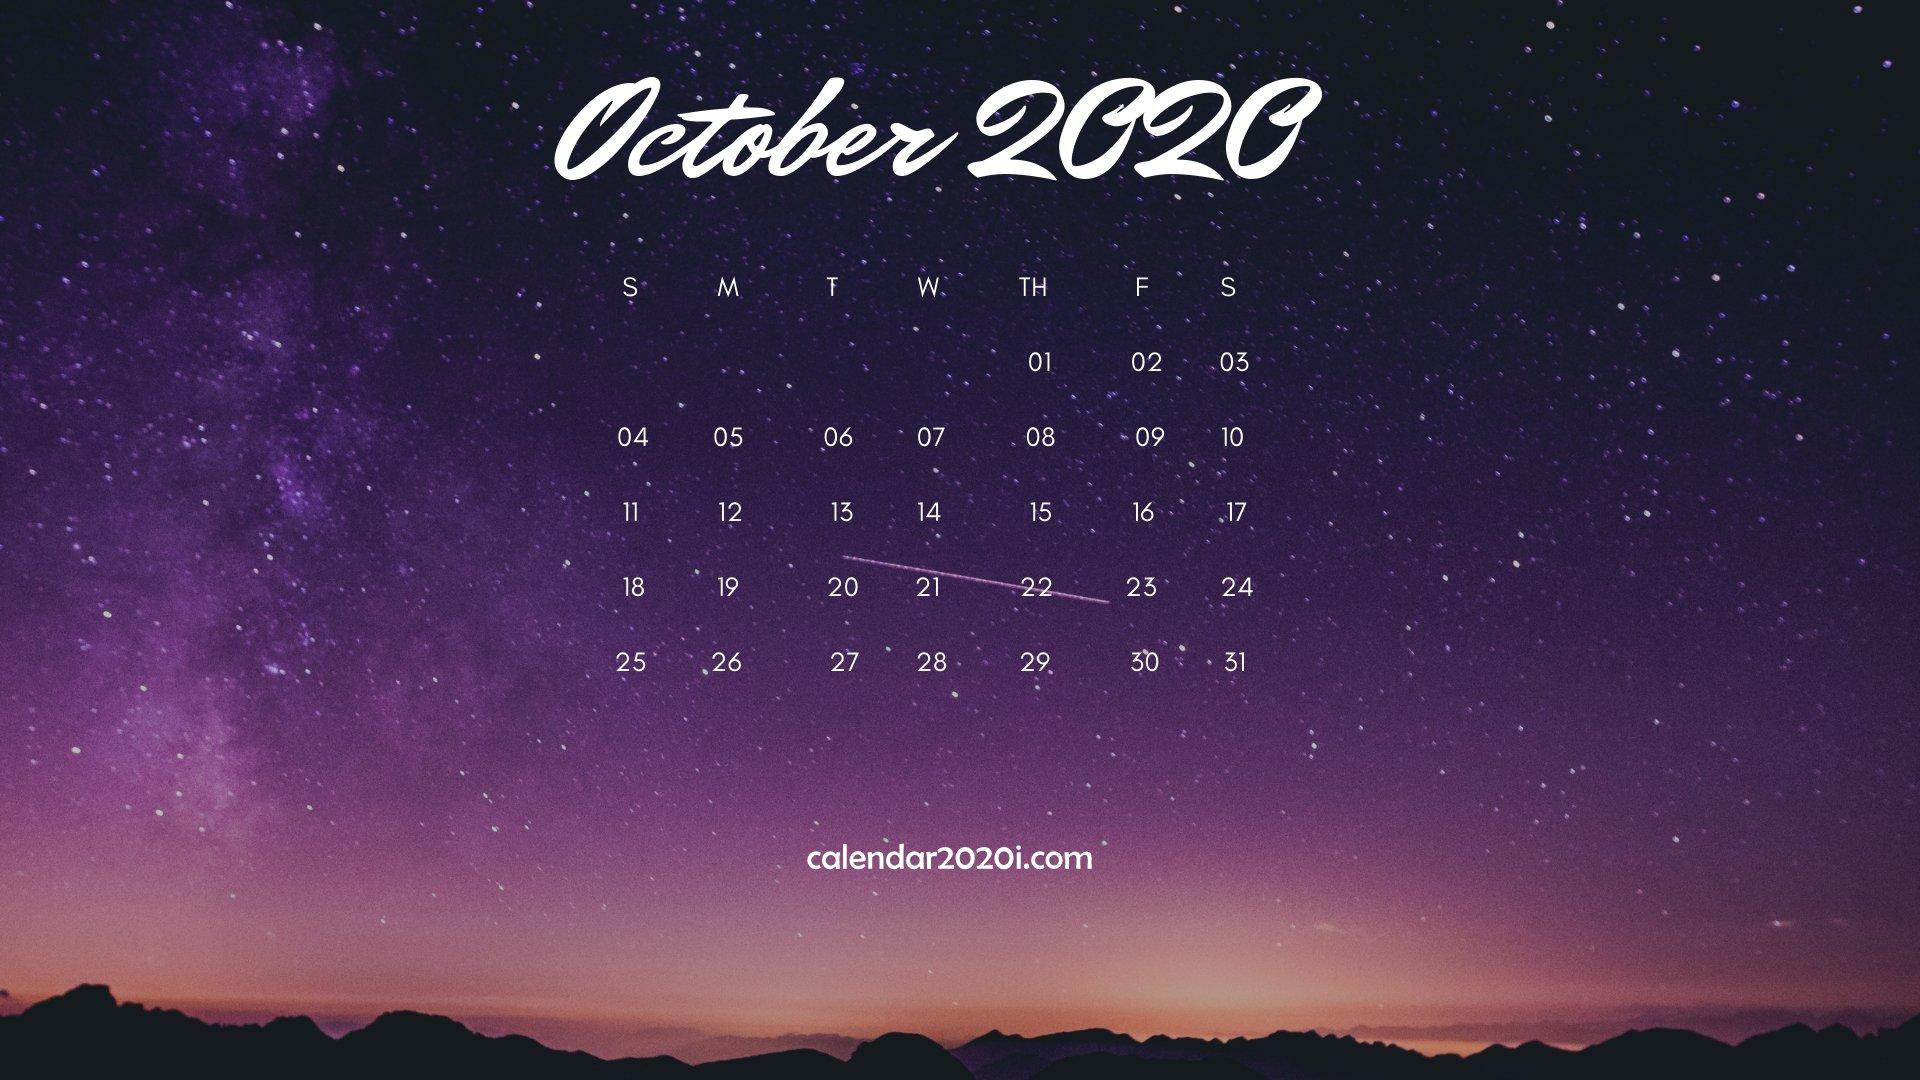 Free download October 2020 desktop calendar wallpapers 22 FREE design